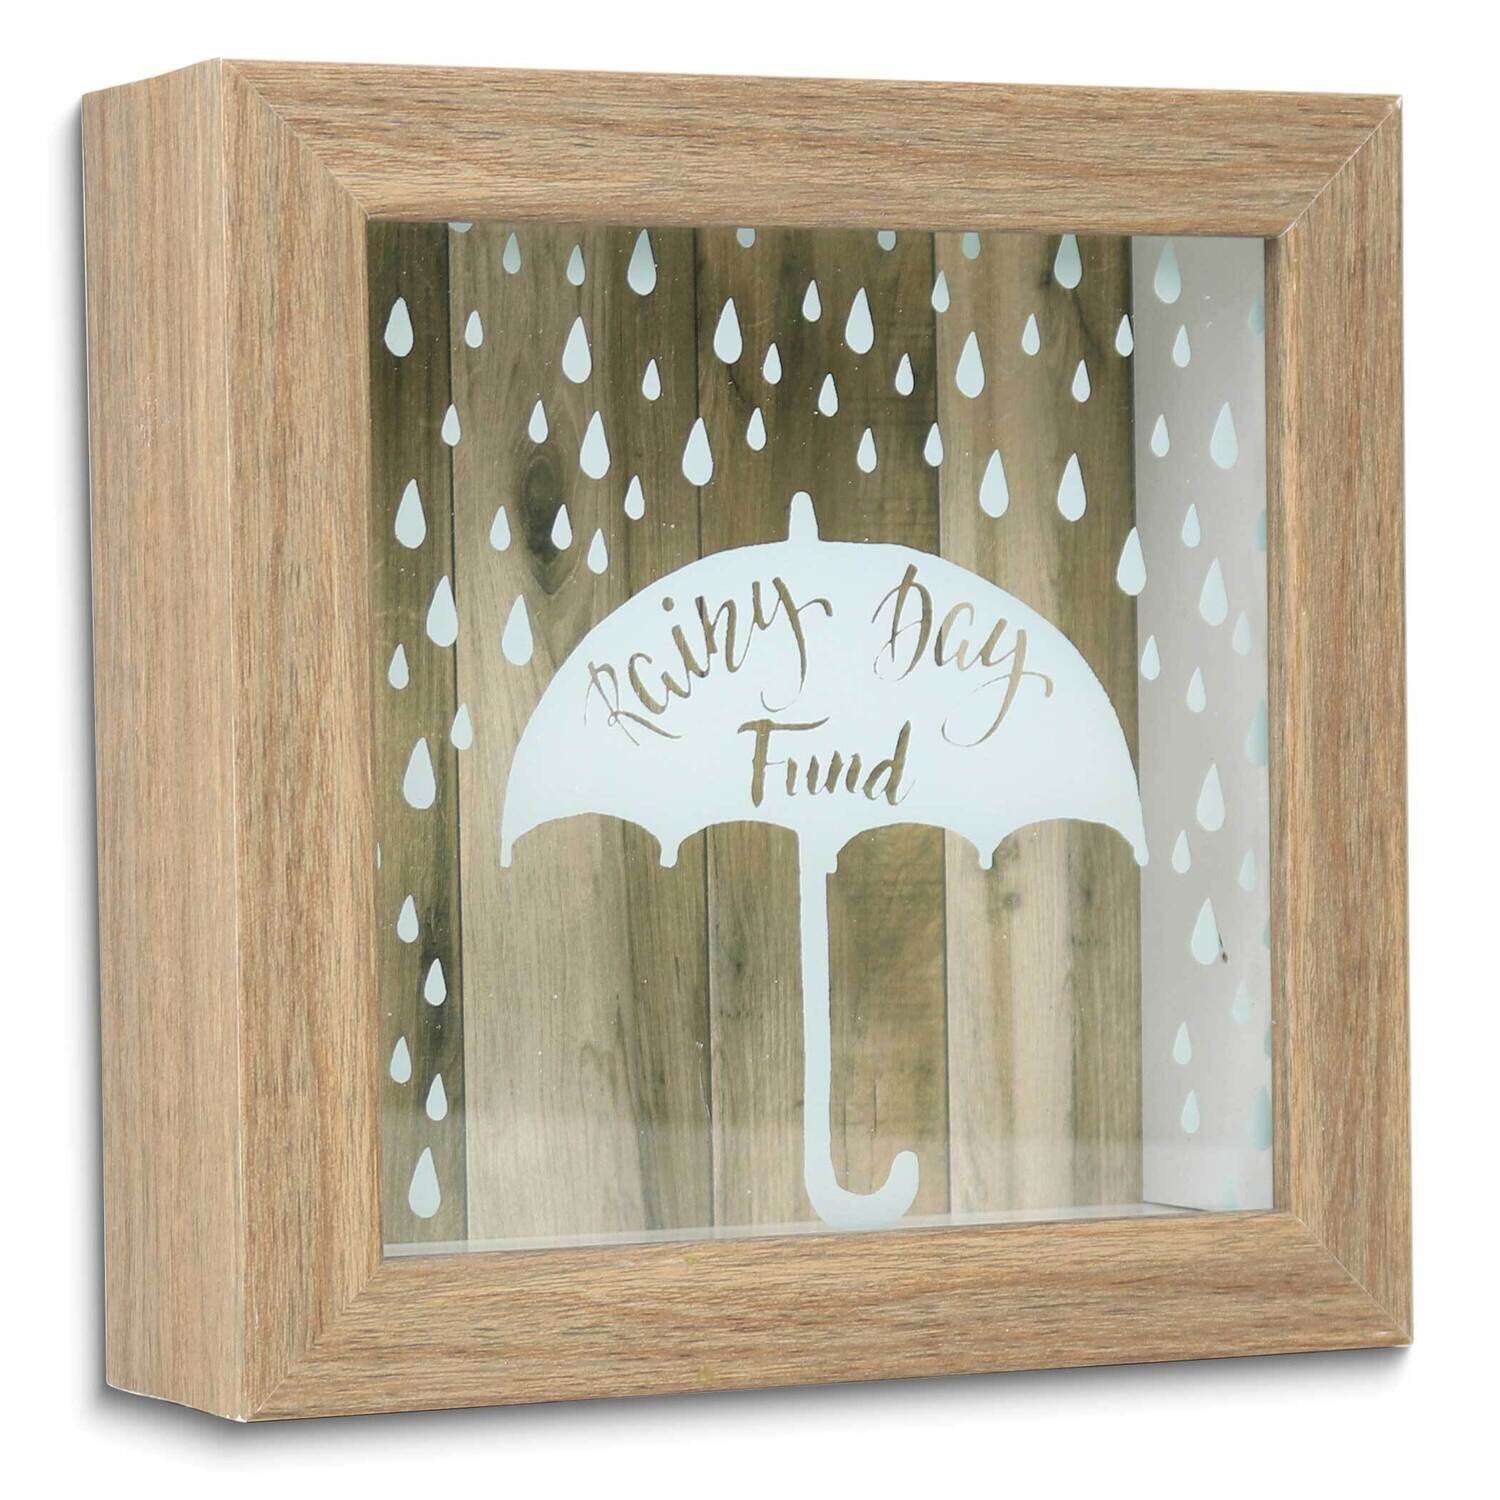 Rainy Day Fund Wooden Shadow Box GM25471